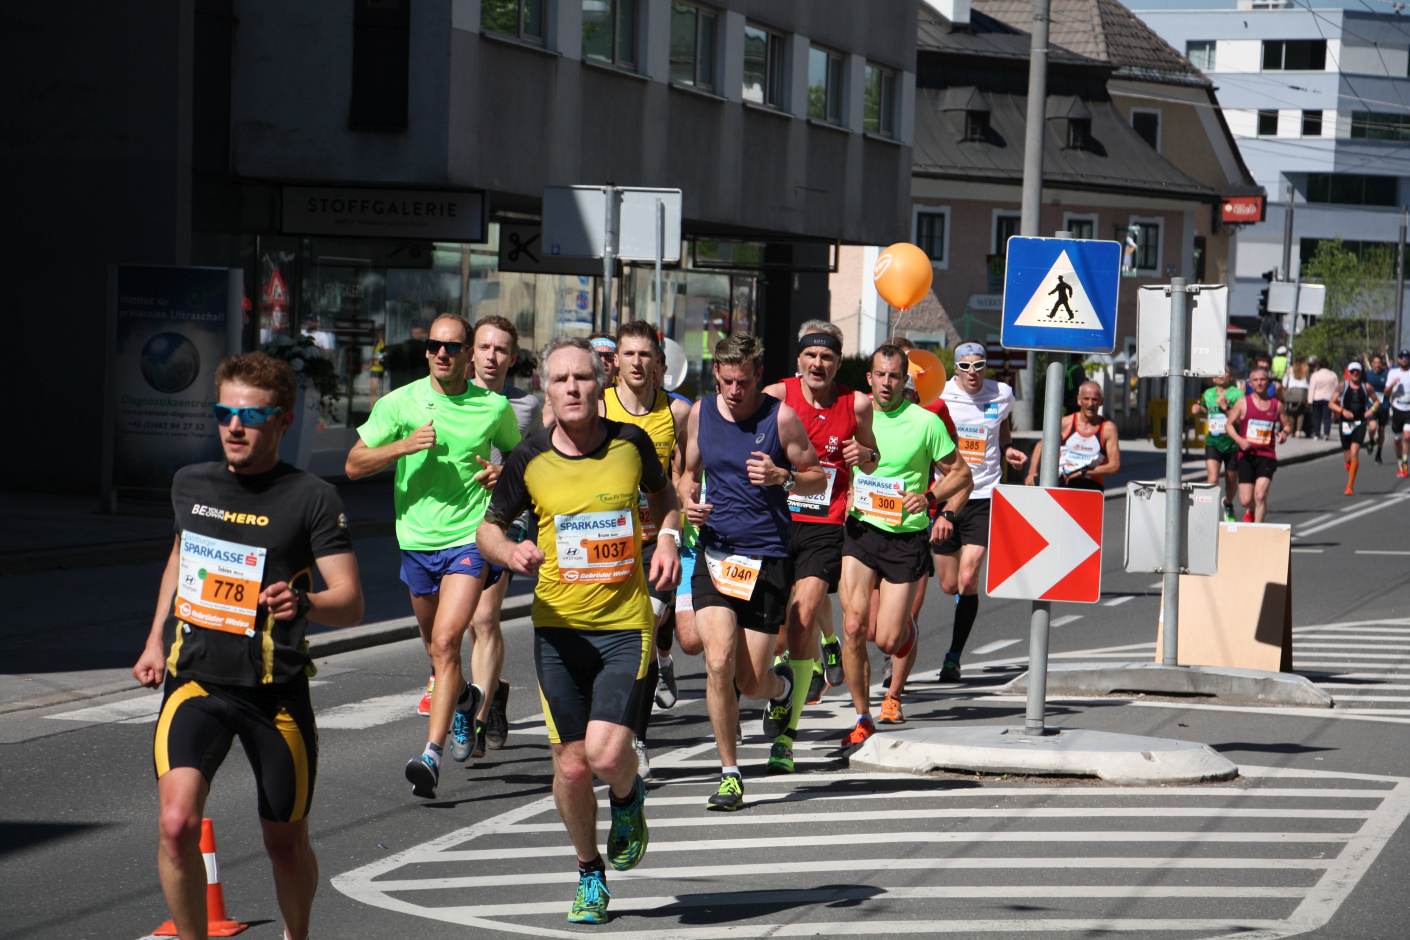 Salzburg Marathon